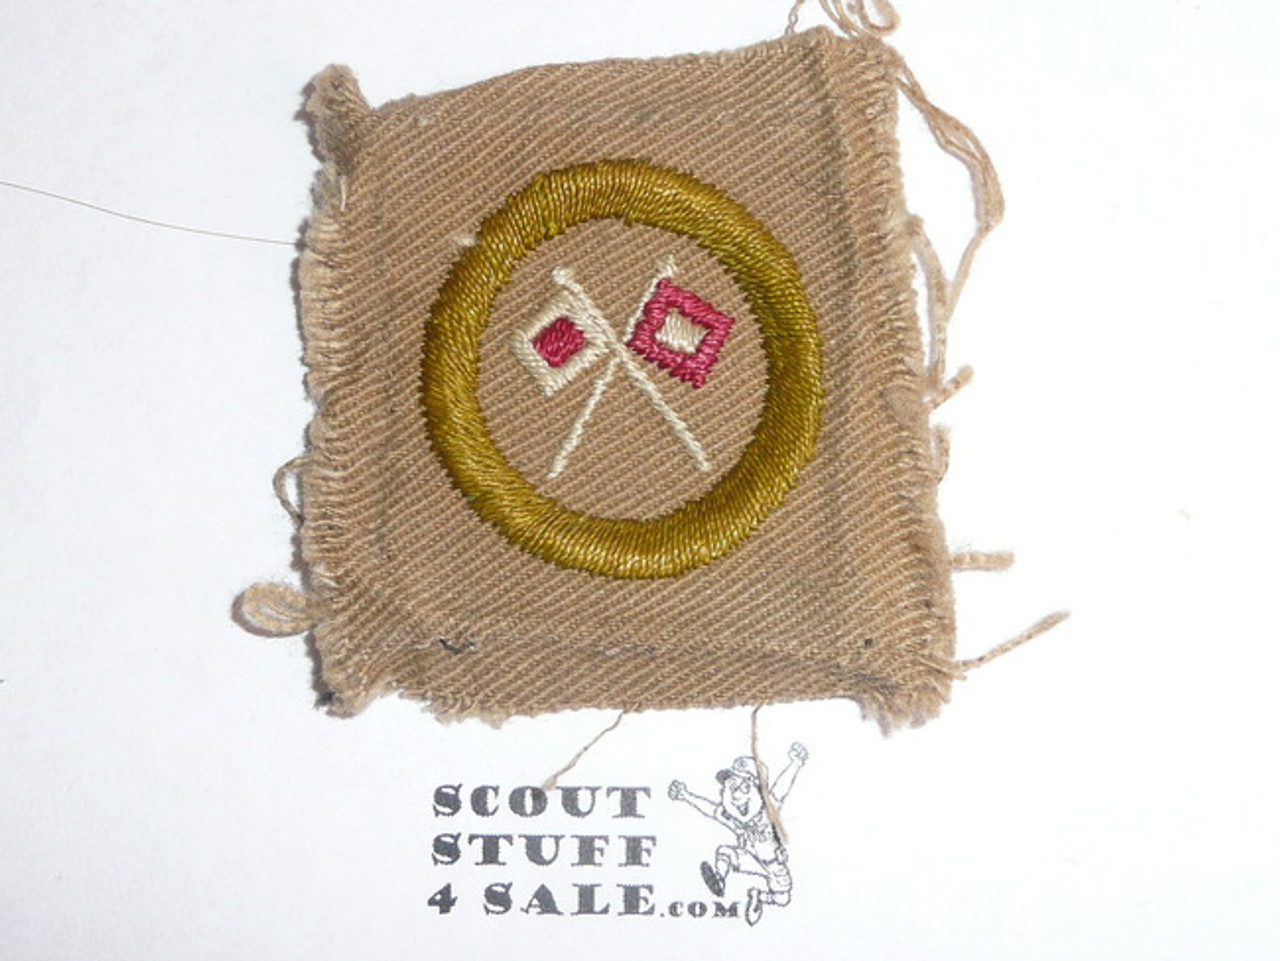 Signaling - Type A - Square Tan Merit Badge (1911-1933), black striped back, used